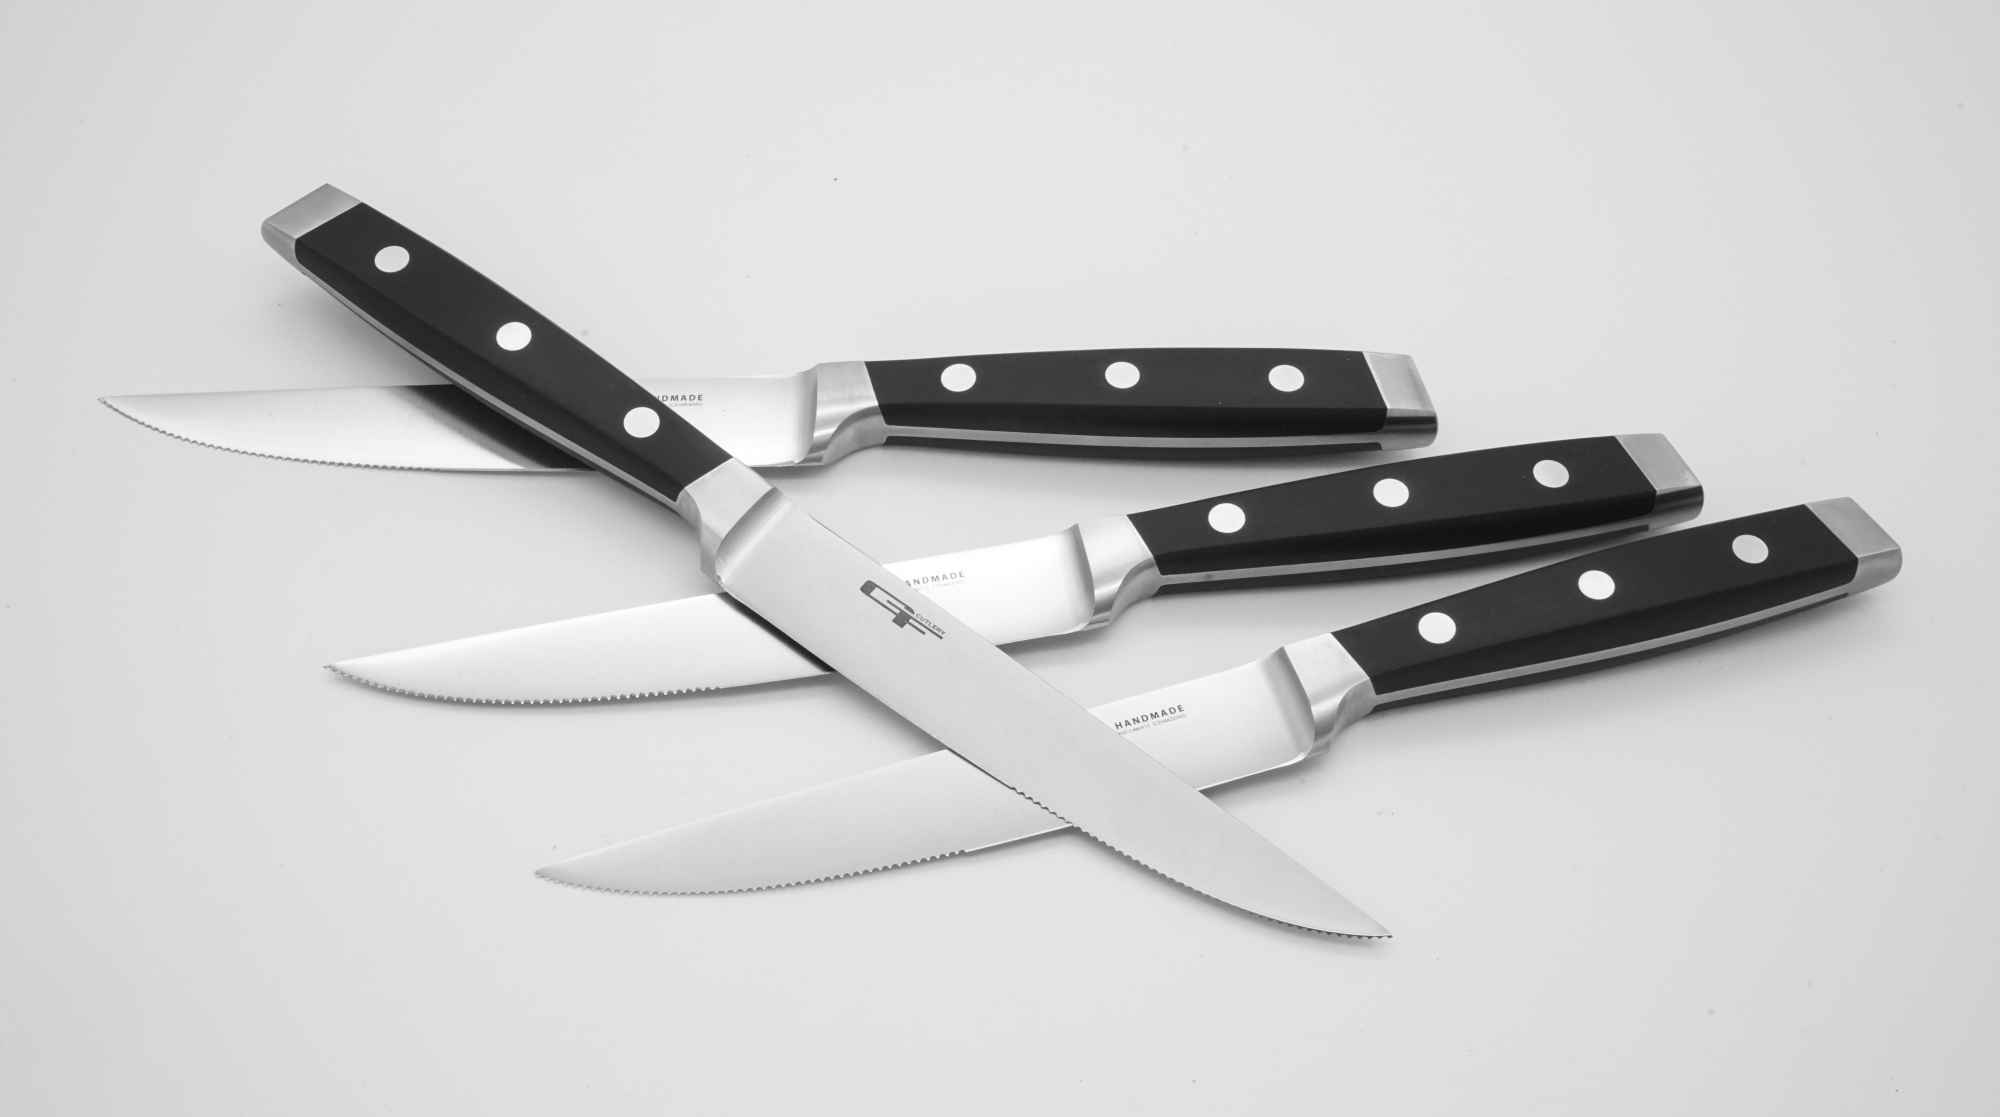 STEAKMESSER_GFC-Giovanni-Filomena-Cutlery-Solingen-MADE-IN-GERMANY-Besteck-Set-Messer-Pfannen-Topf-_-dishes-tableware-knives-knife-Tafelware-rostfrei-Edelstahl-stainless-steel-DSC01587-2